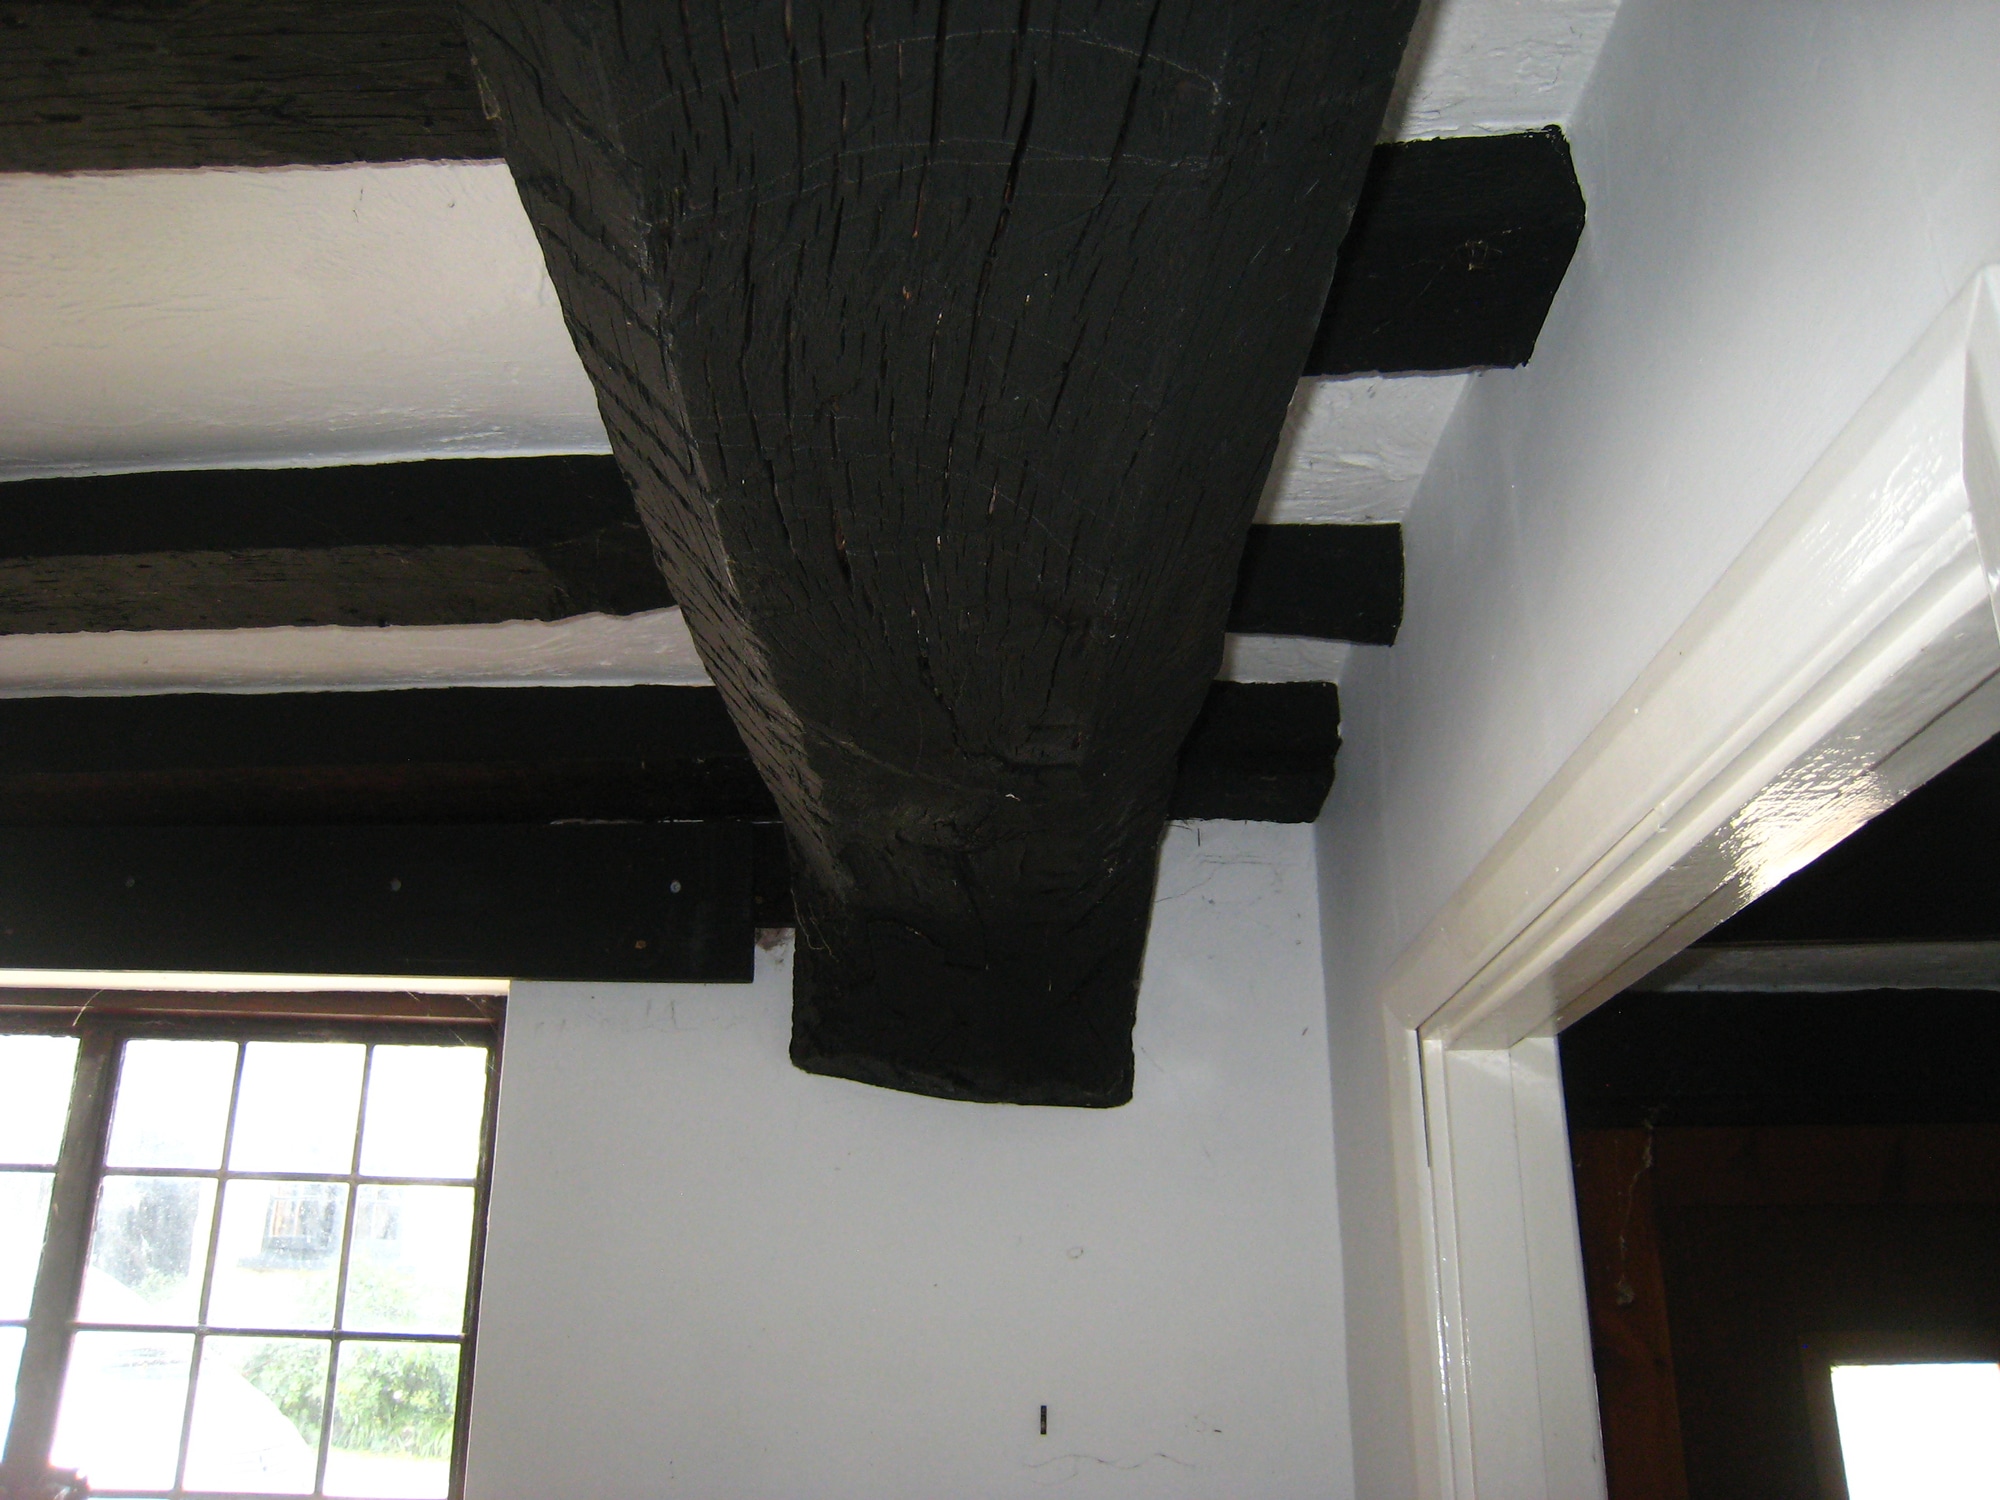 Period ceiling beams